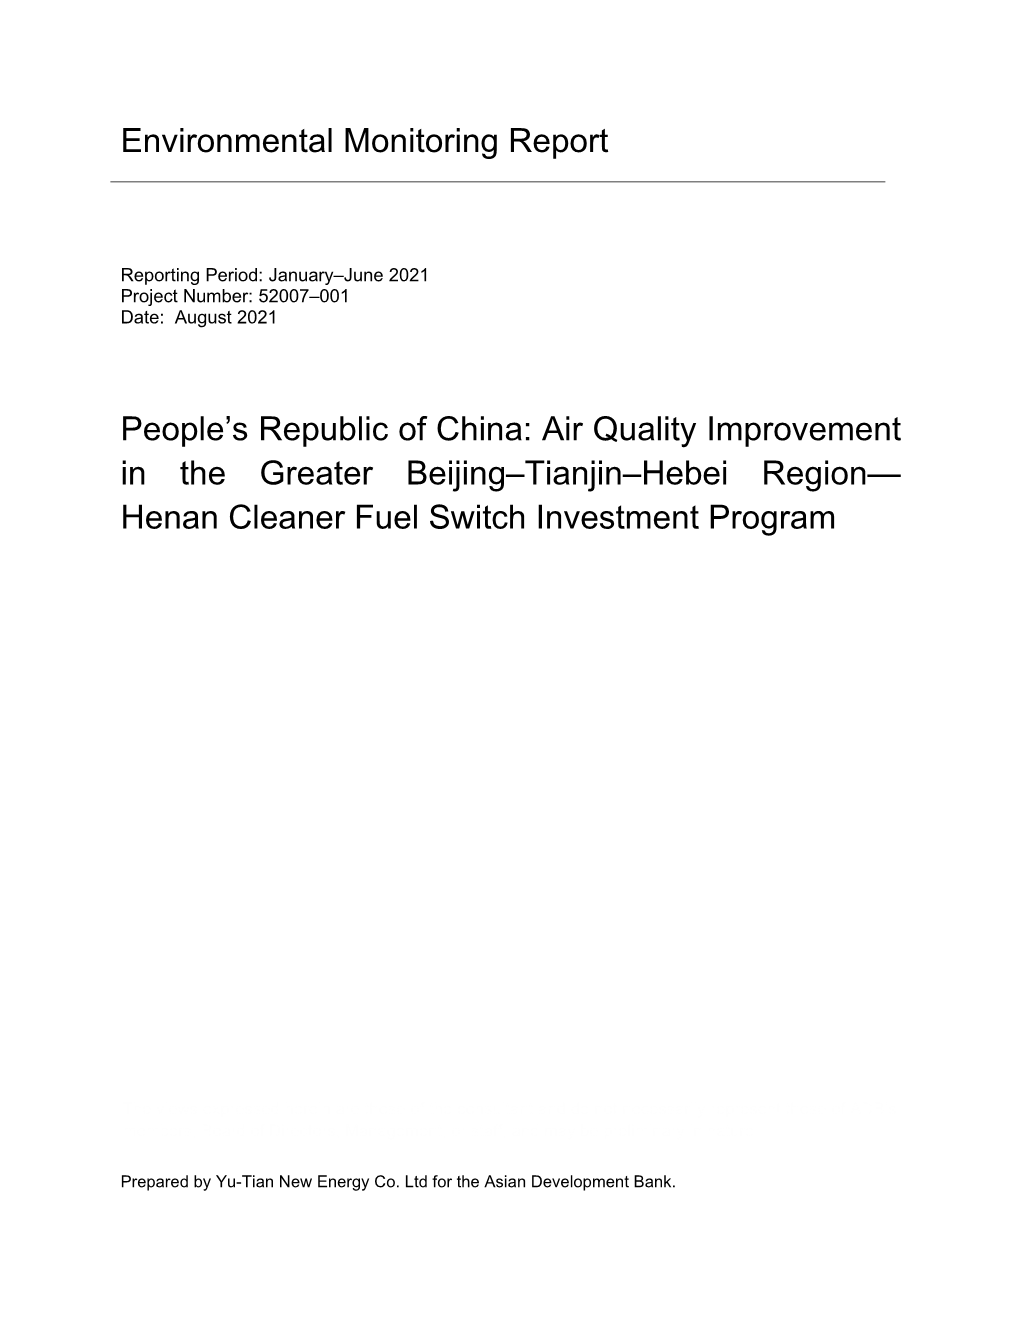 Environmental Monitoring Report People's Republic of China